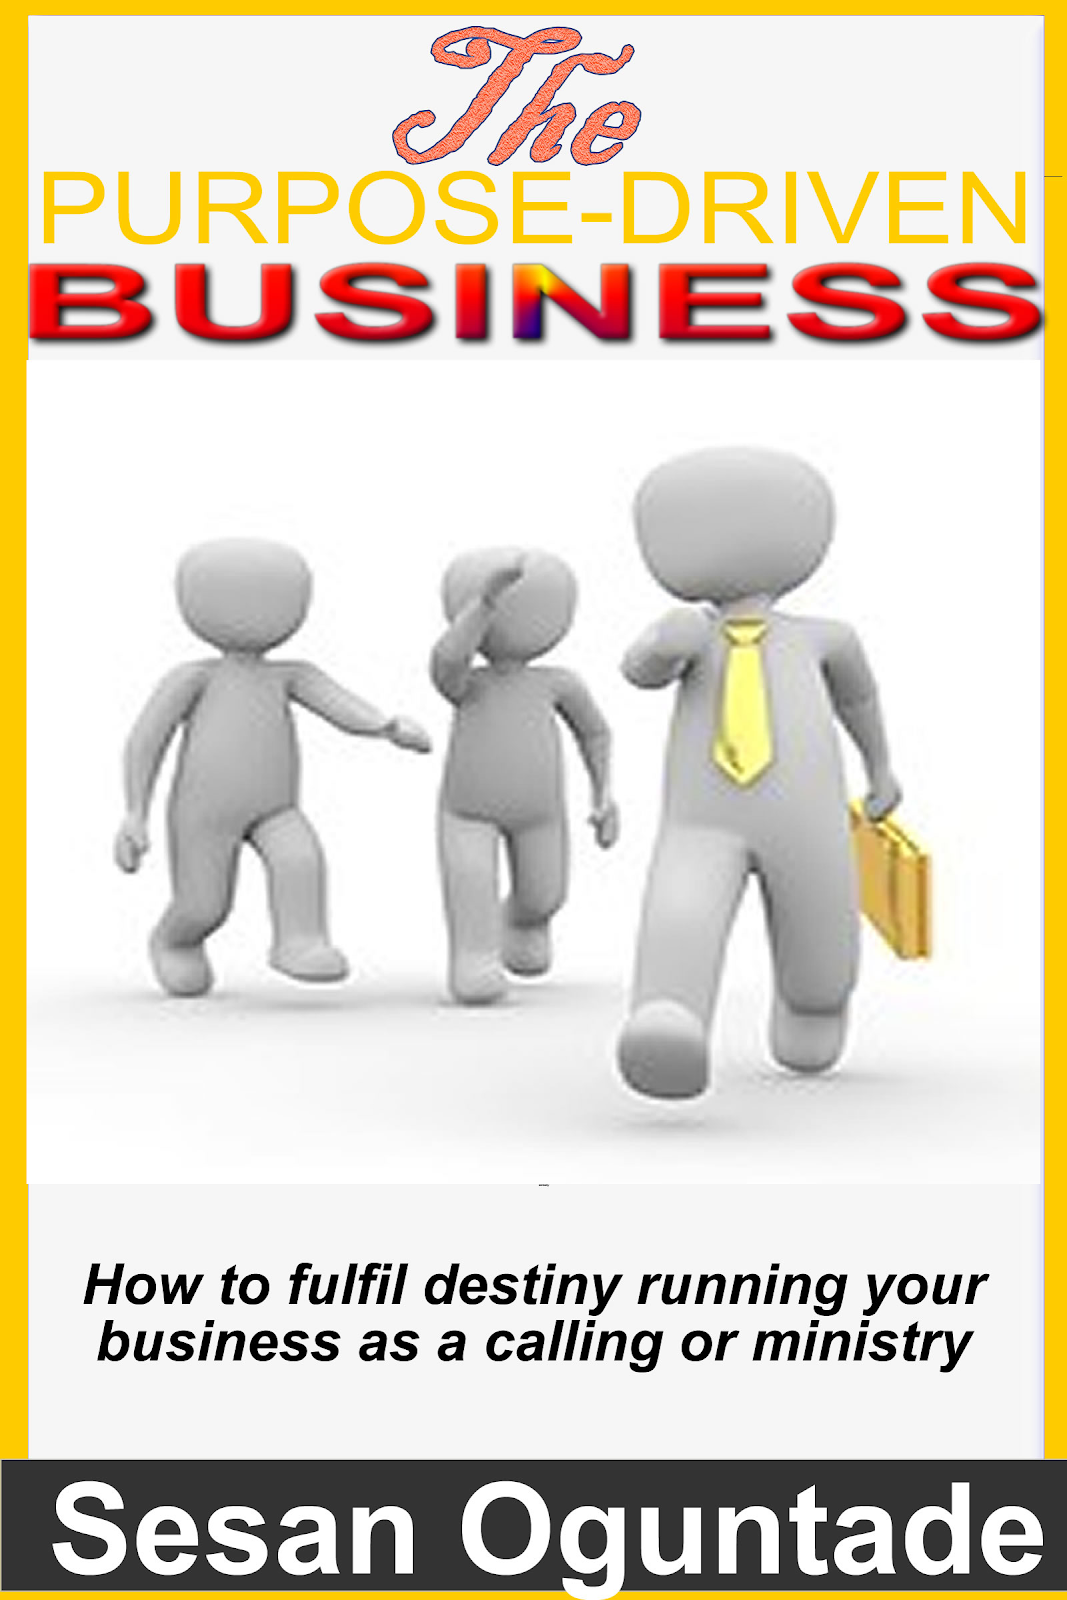 Spiritual help for business success